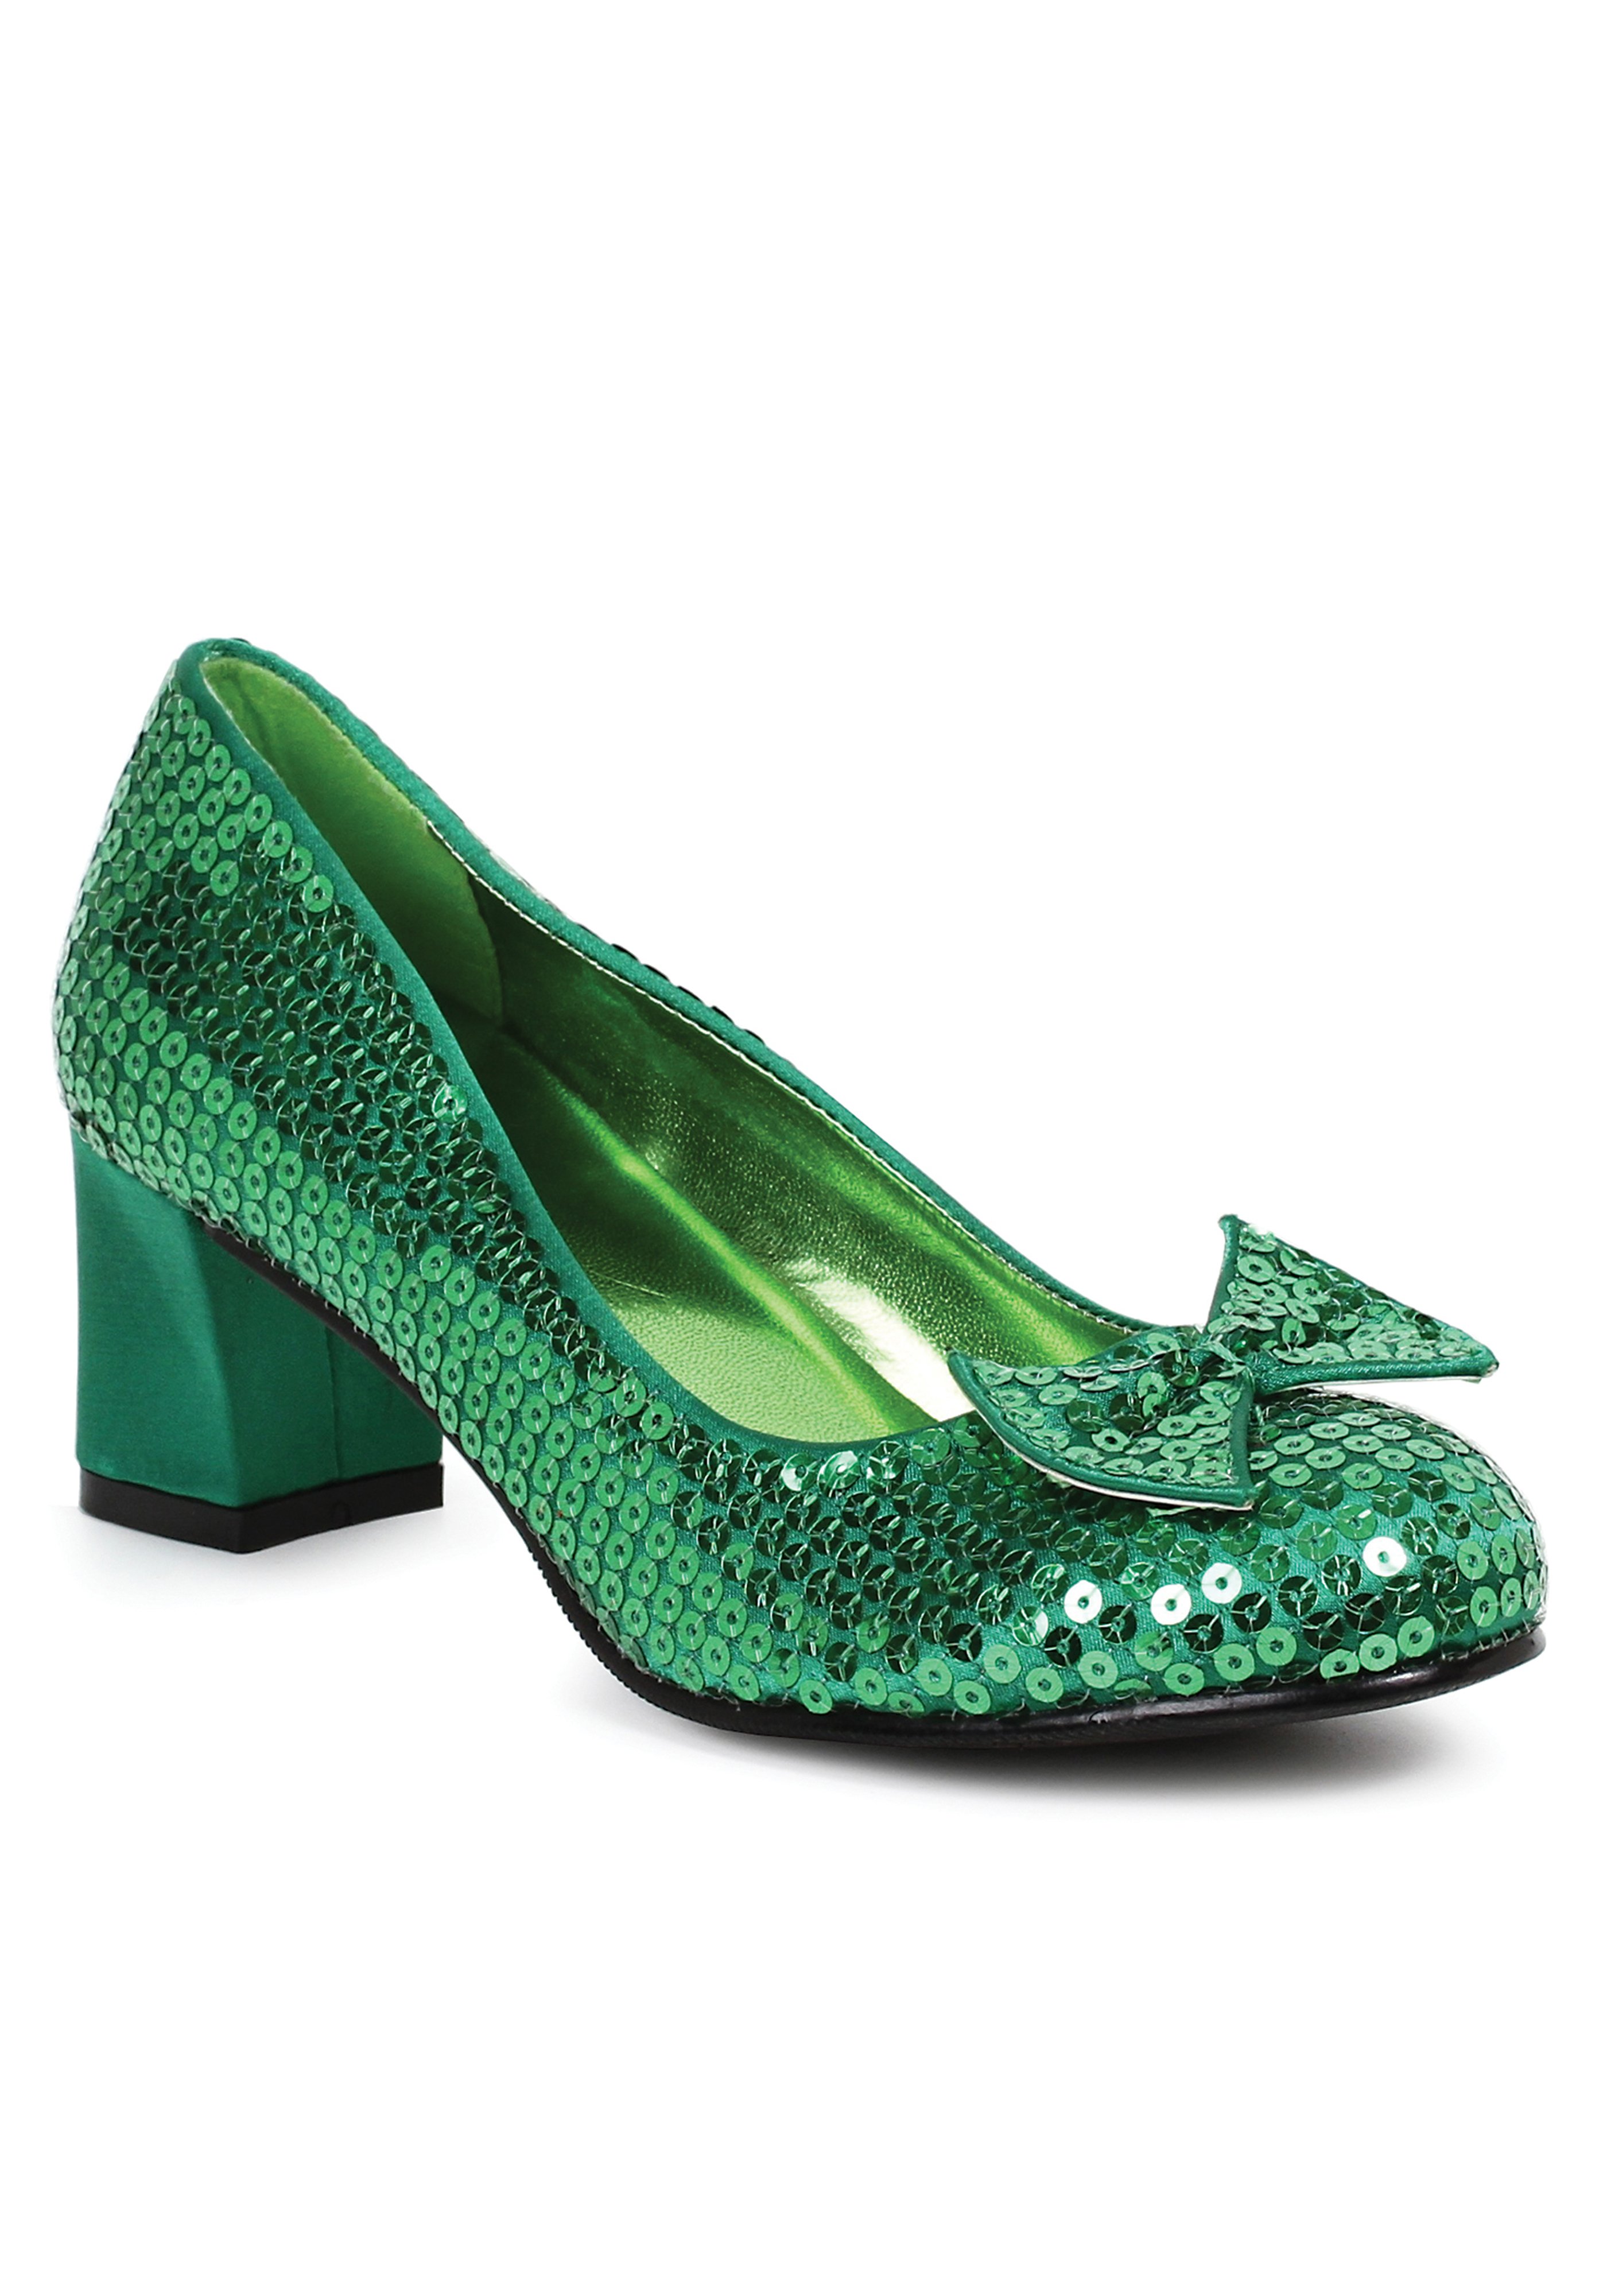 Ellie Shoes 203-JUDY Women's 2 Inch Heel Pump With Sequins | eBay